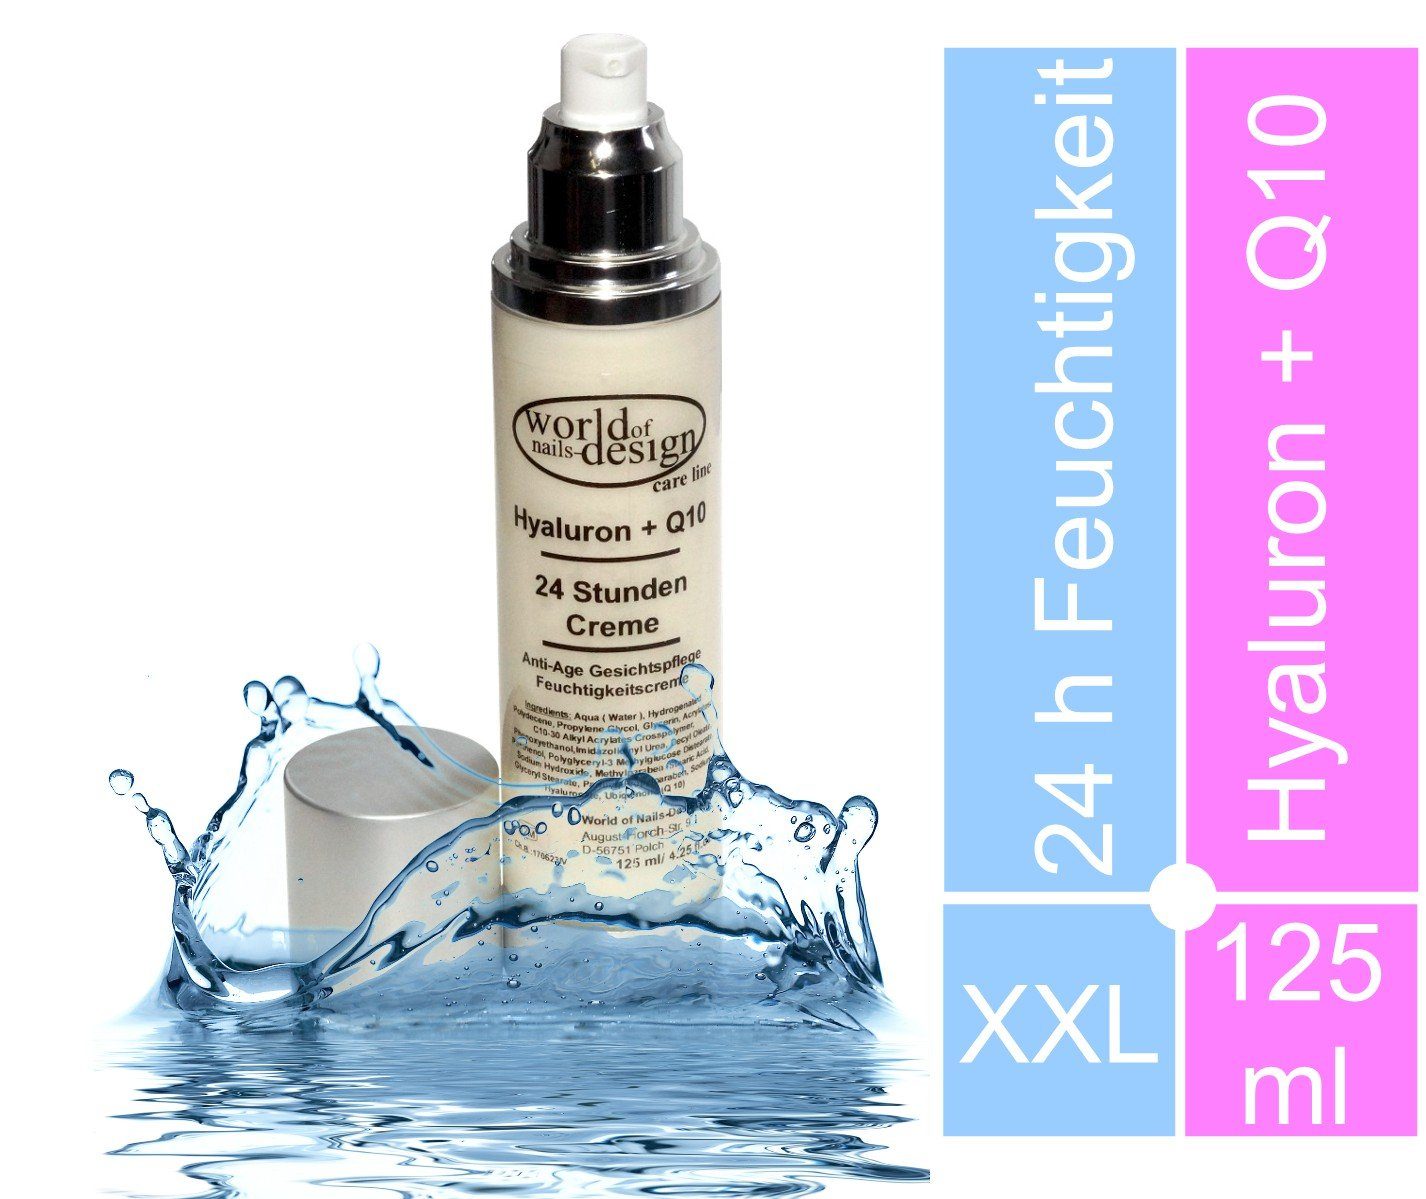 Hyaluron 24 of World Creme + Nails-Design Stunden Q10, Feuchtigkeitscreme Anti-Aging